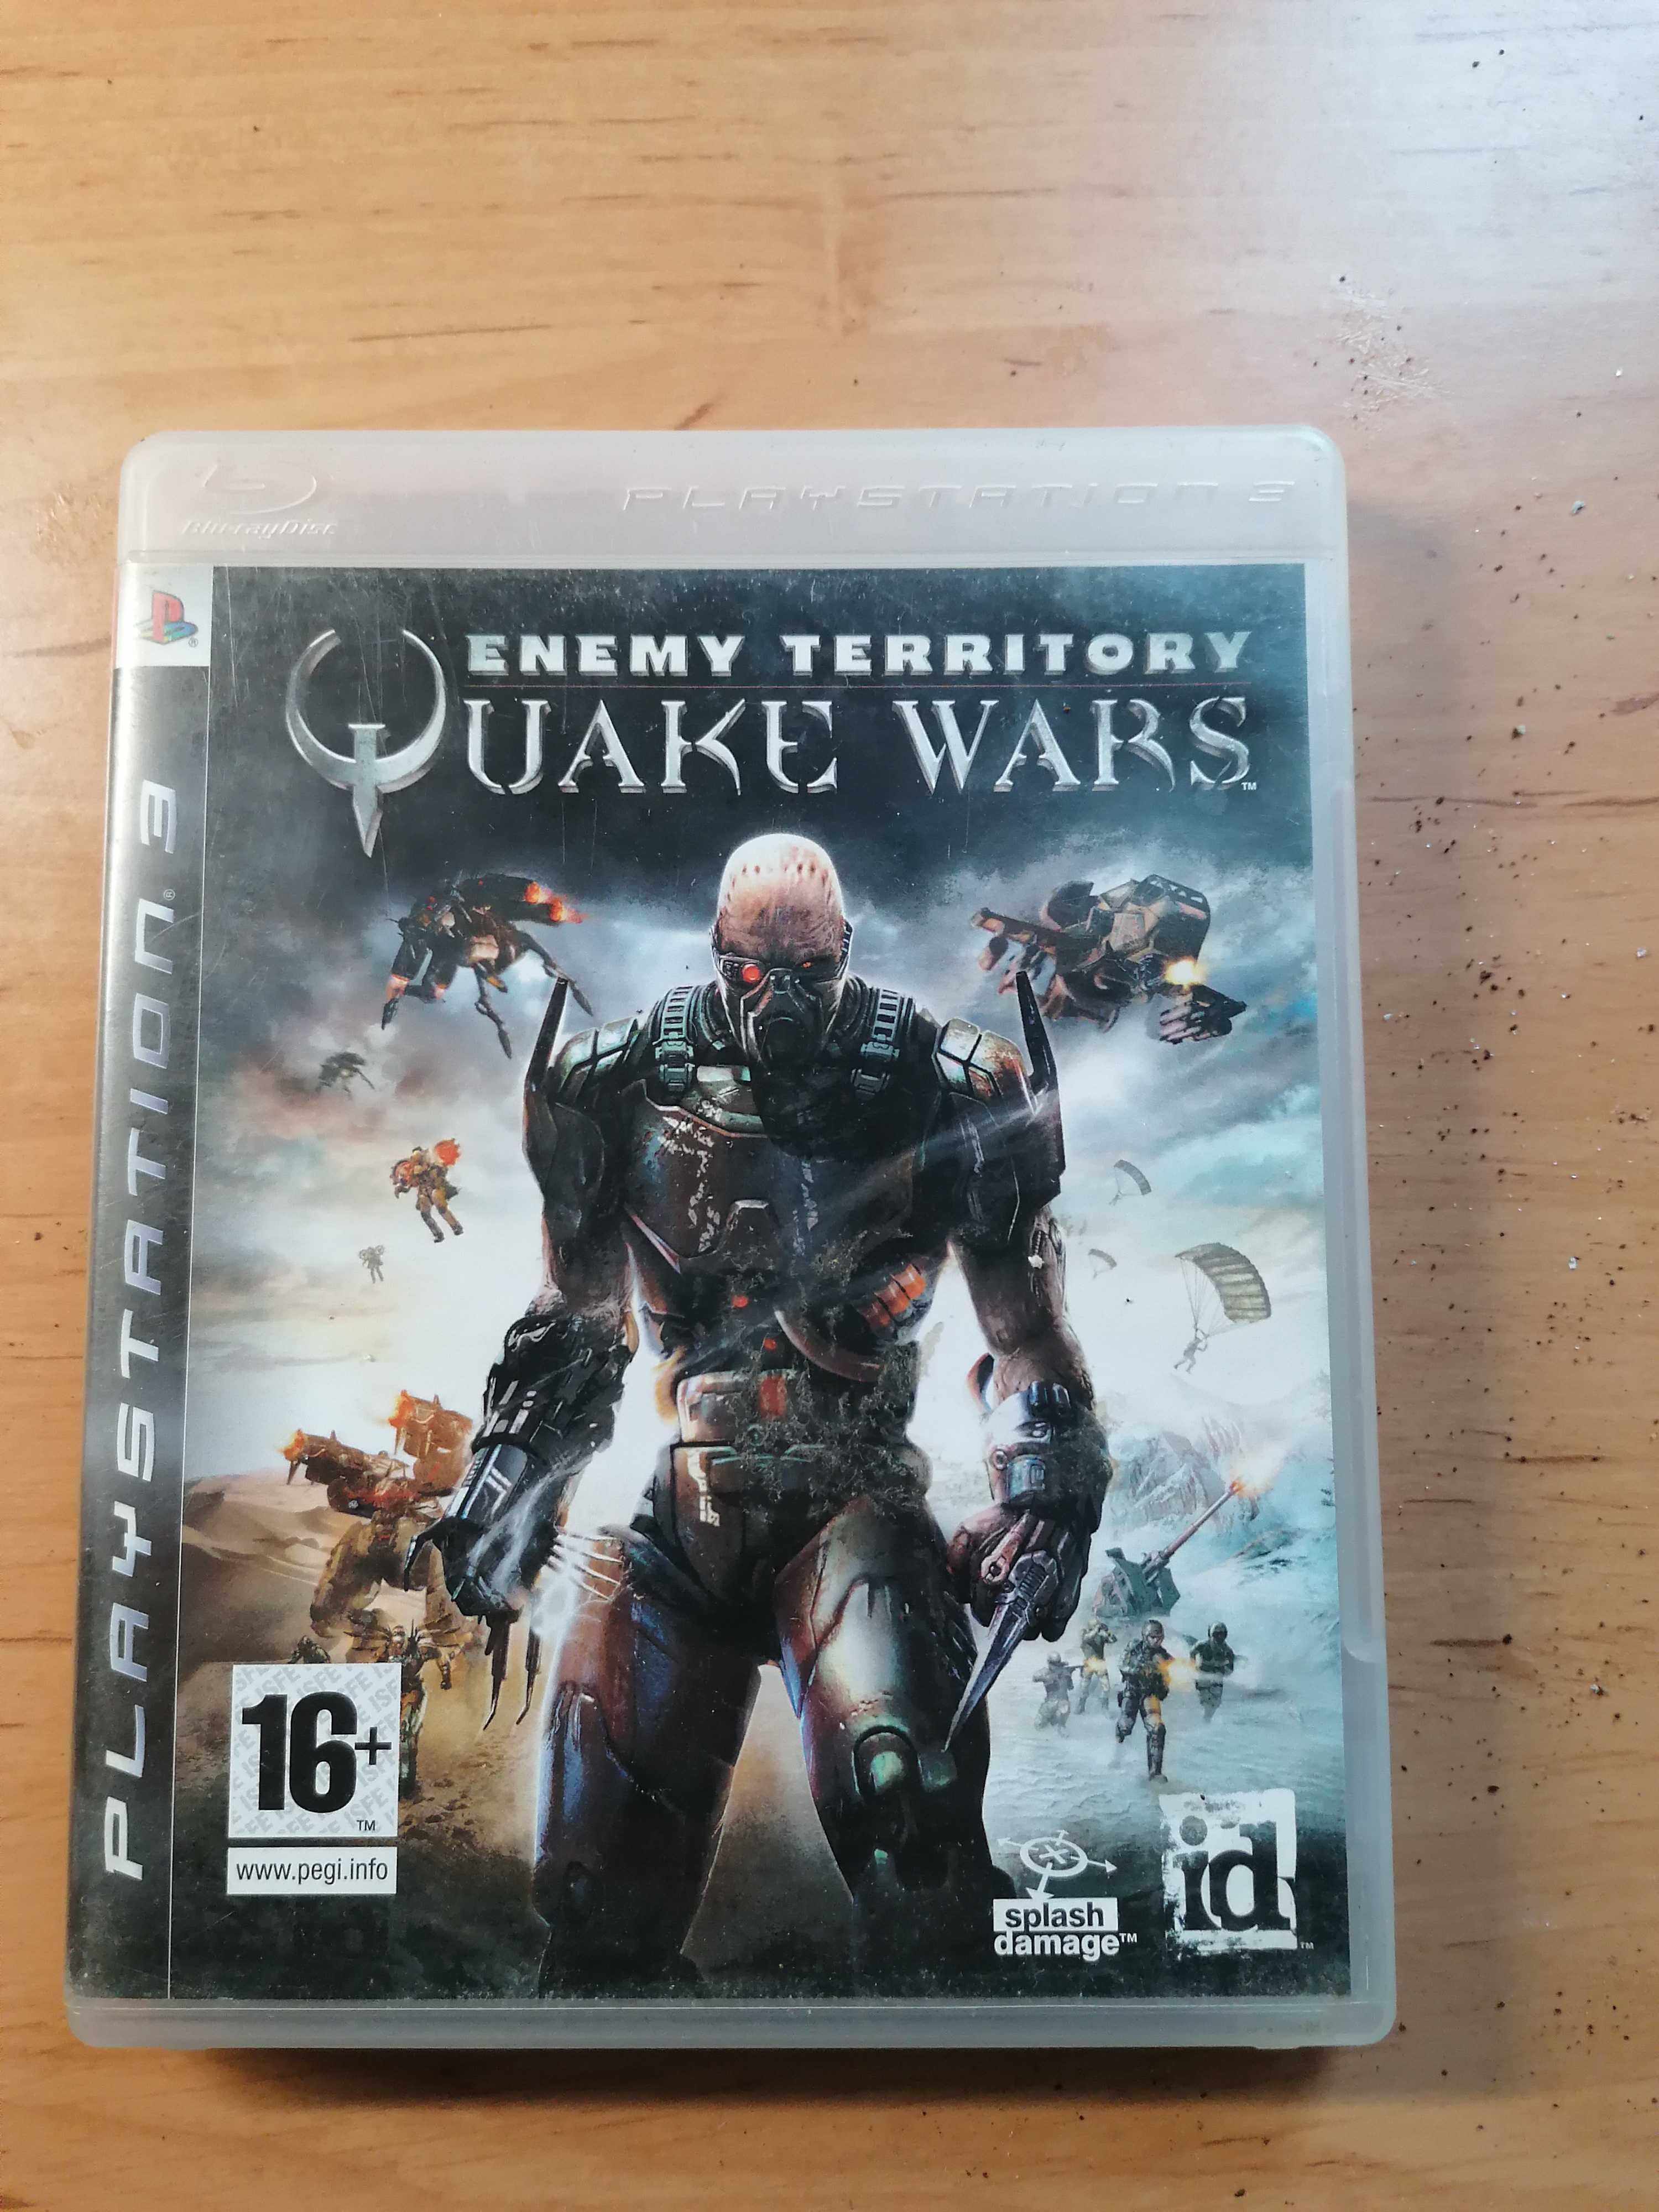 Quake Wass EnemyTerritory PS3